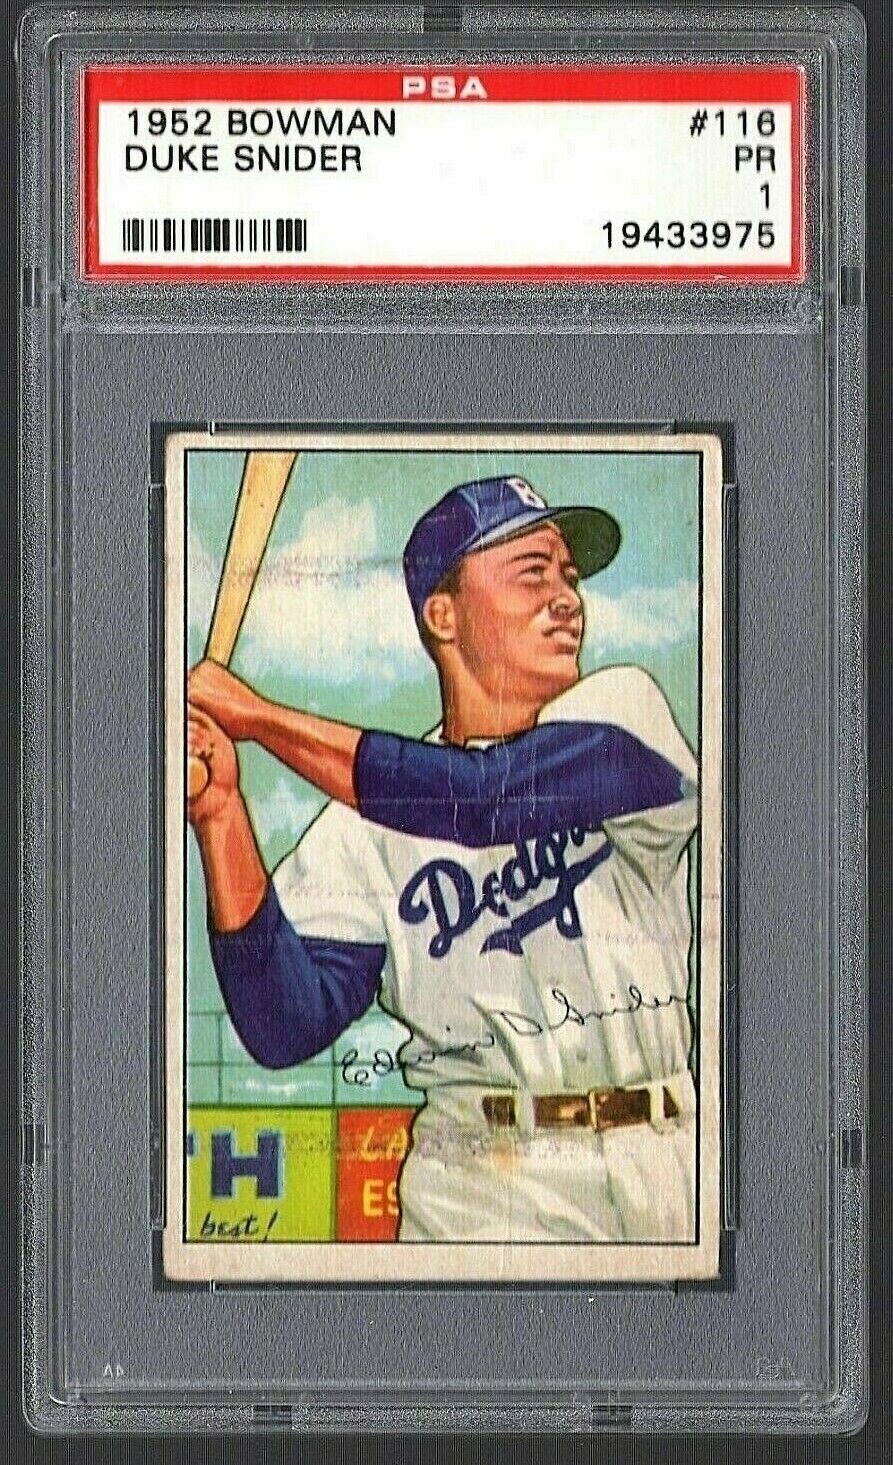 1952 Bowman Duke Snider #116 Baseball Card PSA 1 - Inventory: 1500r